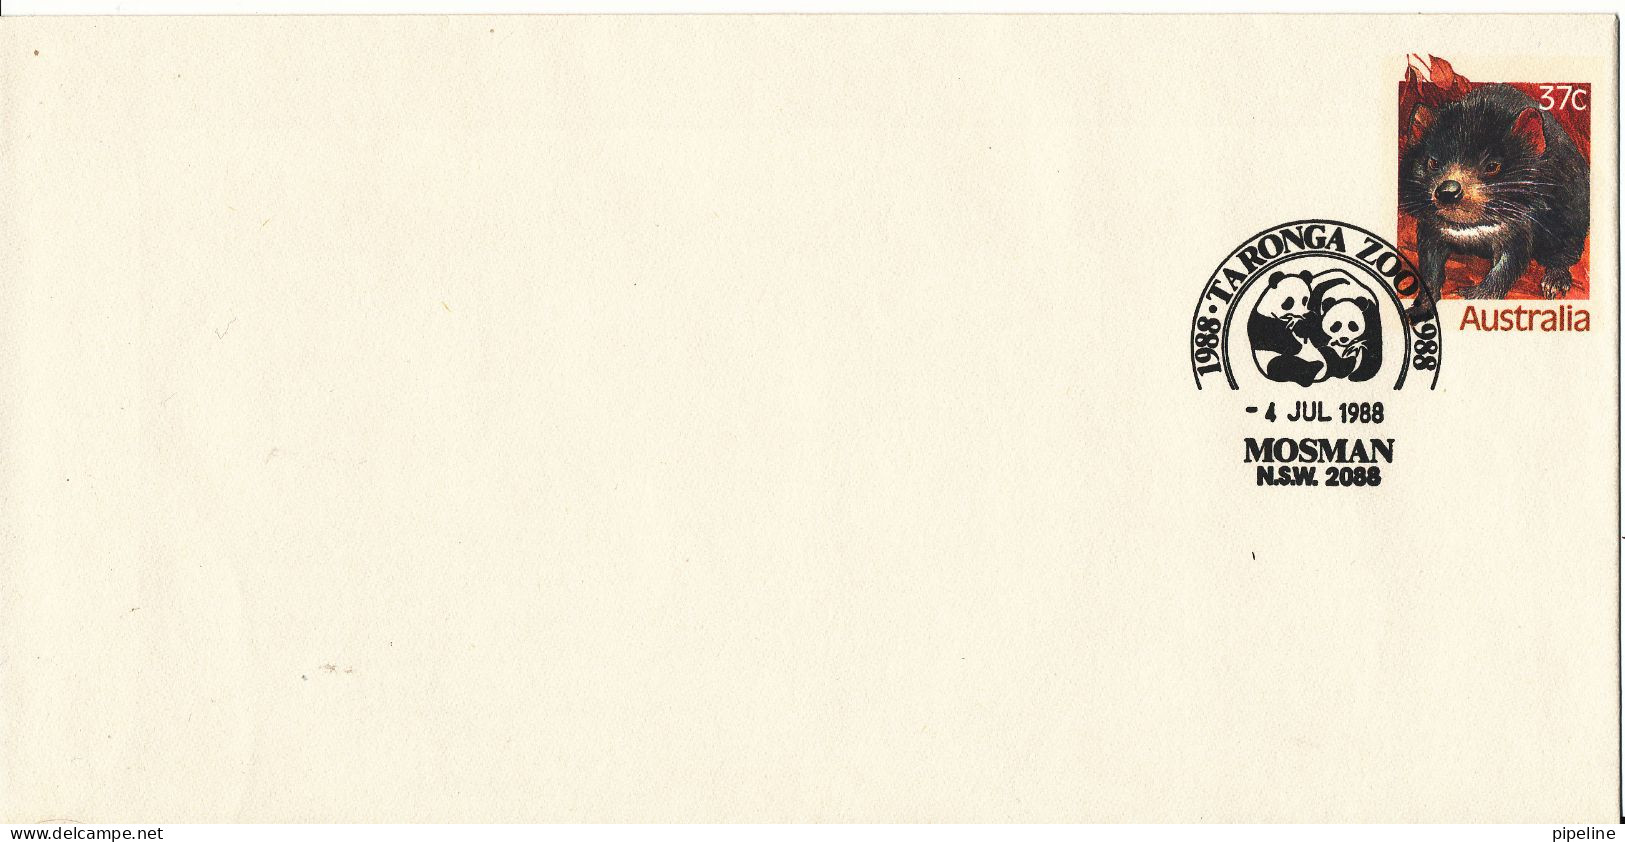 Australia Postal Stationery Cover 100 Anniversary Taronga Zoo Mosman 4-7-1998 With PANDA In The Postmark - Ganzsachen